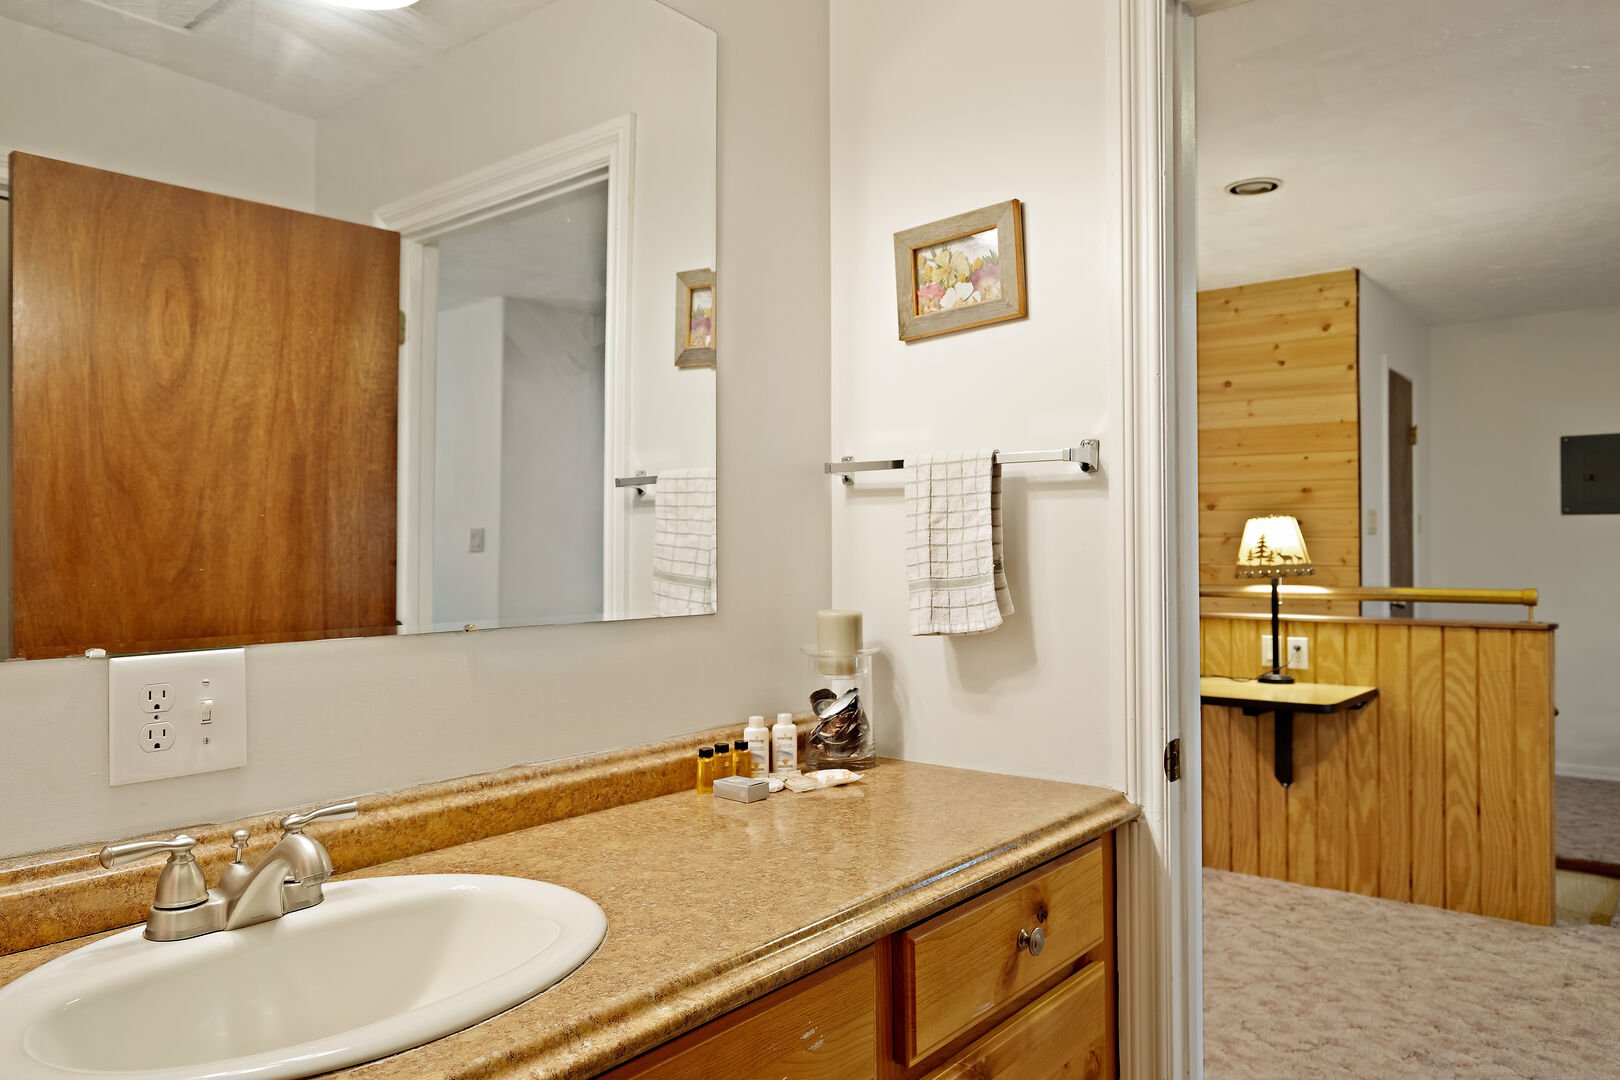 Moose Drool ~ shared bathroom on upper level